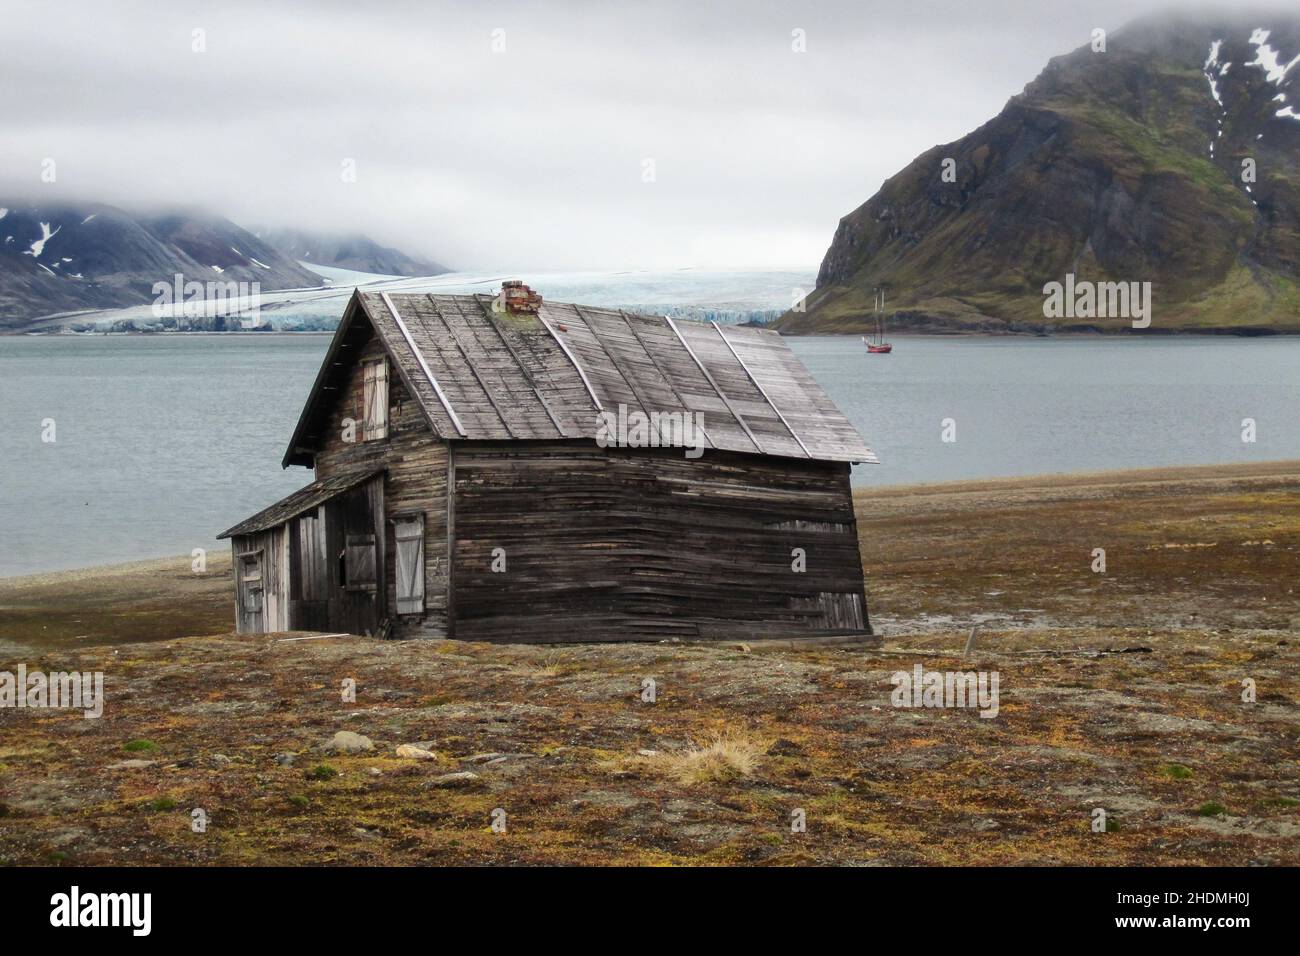 slanted, wooden cabin, svalbard islands, slanteds, cabins Stock Photo